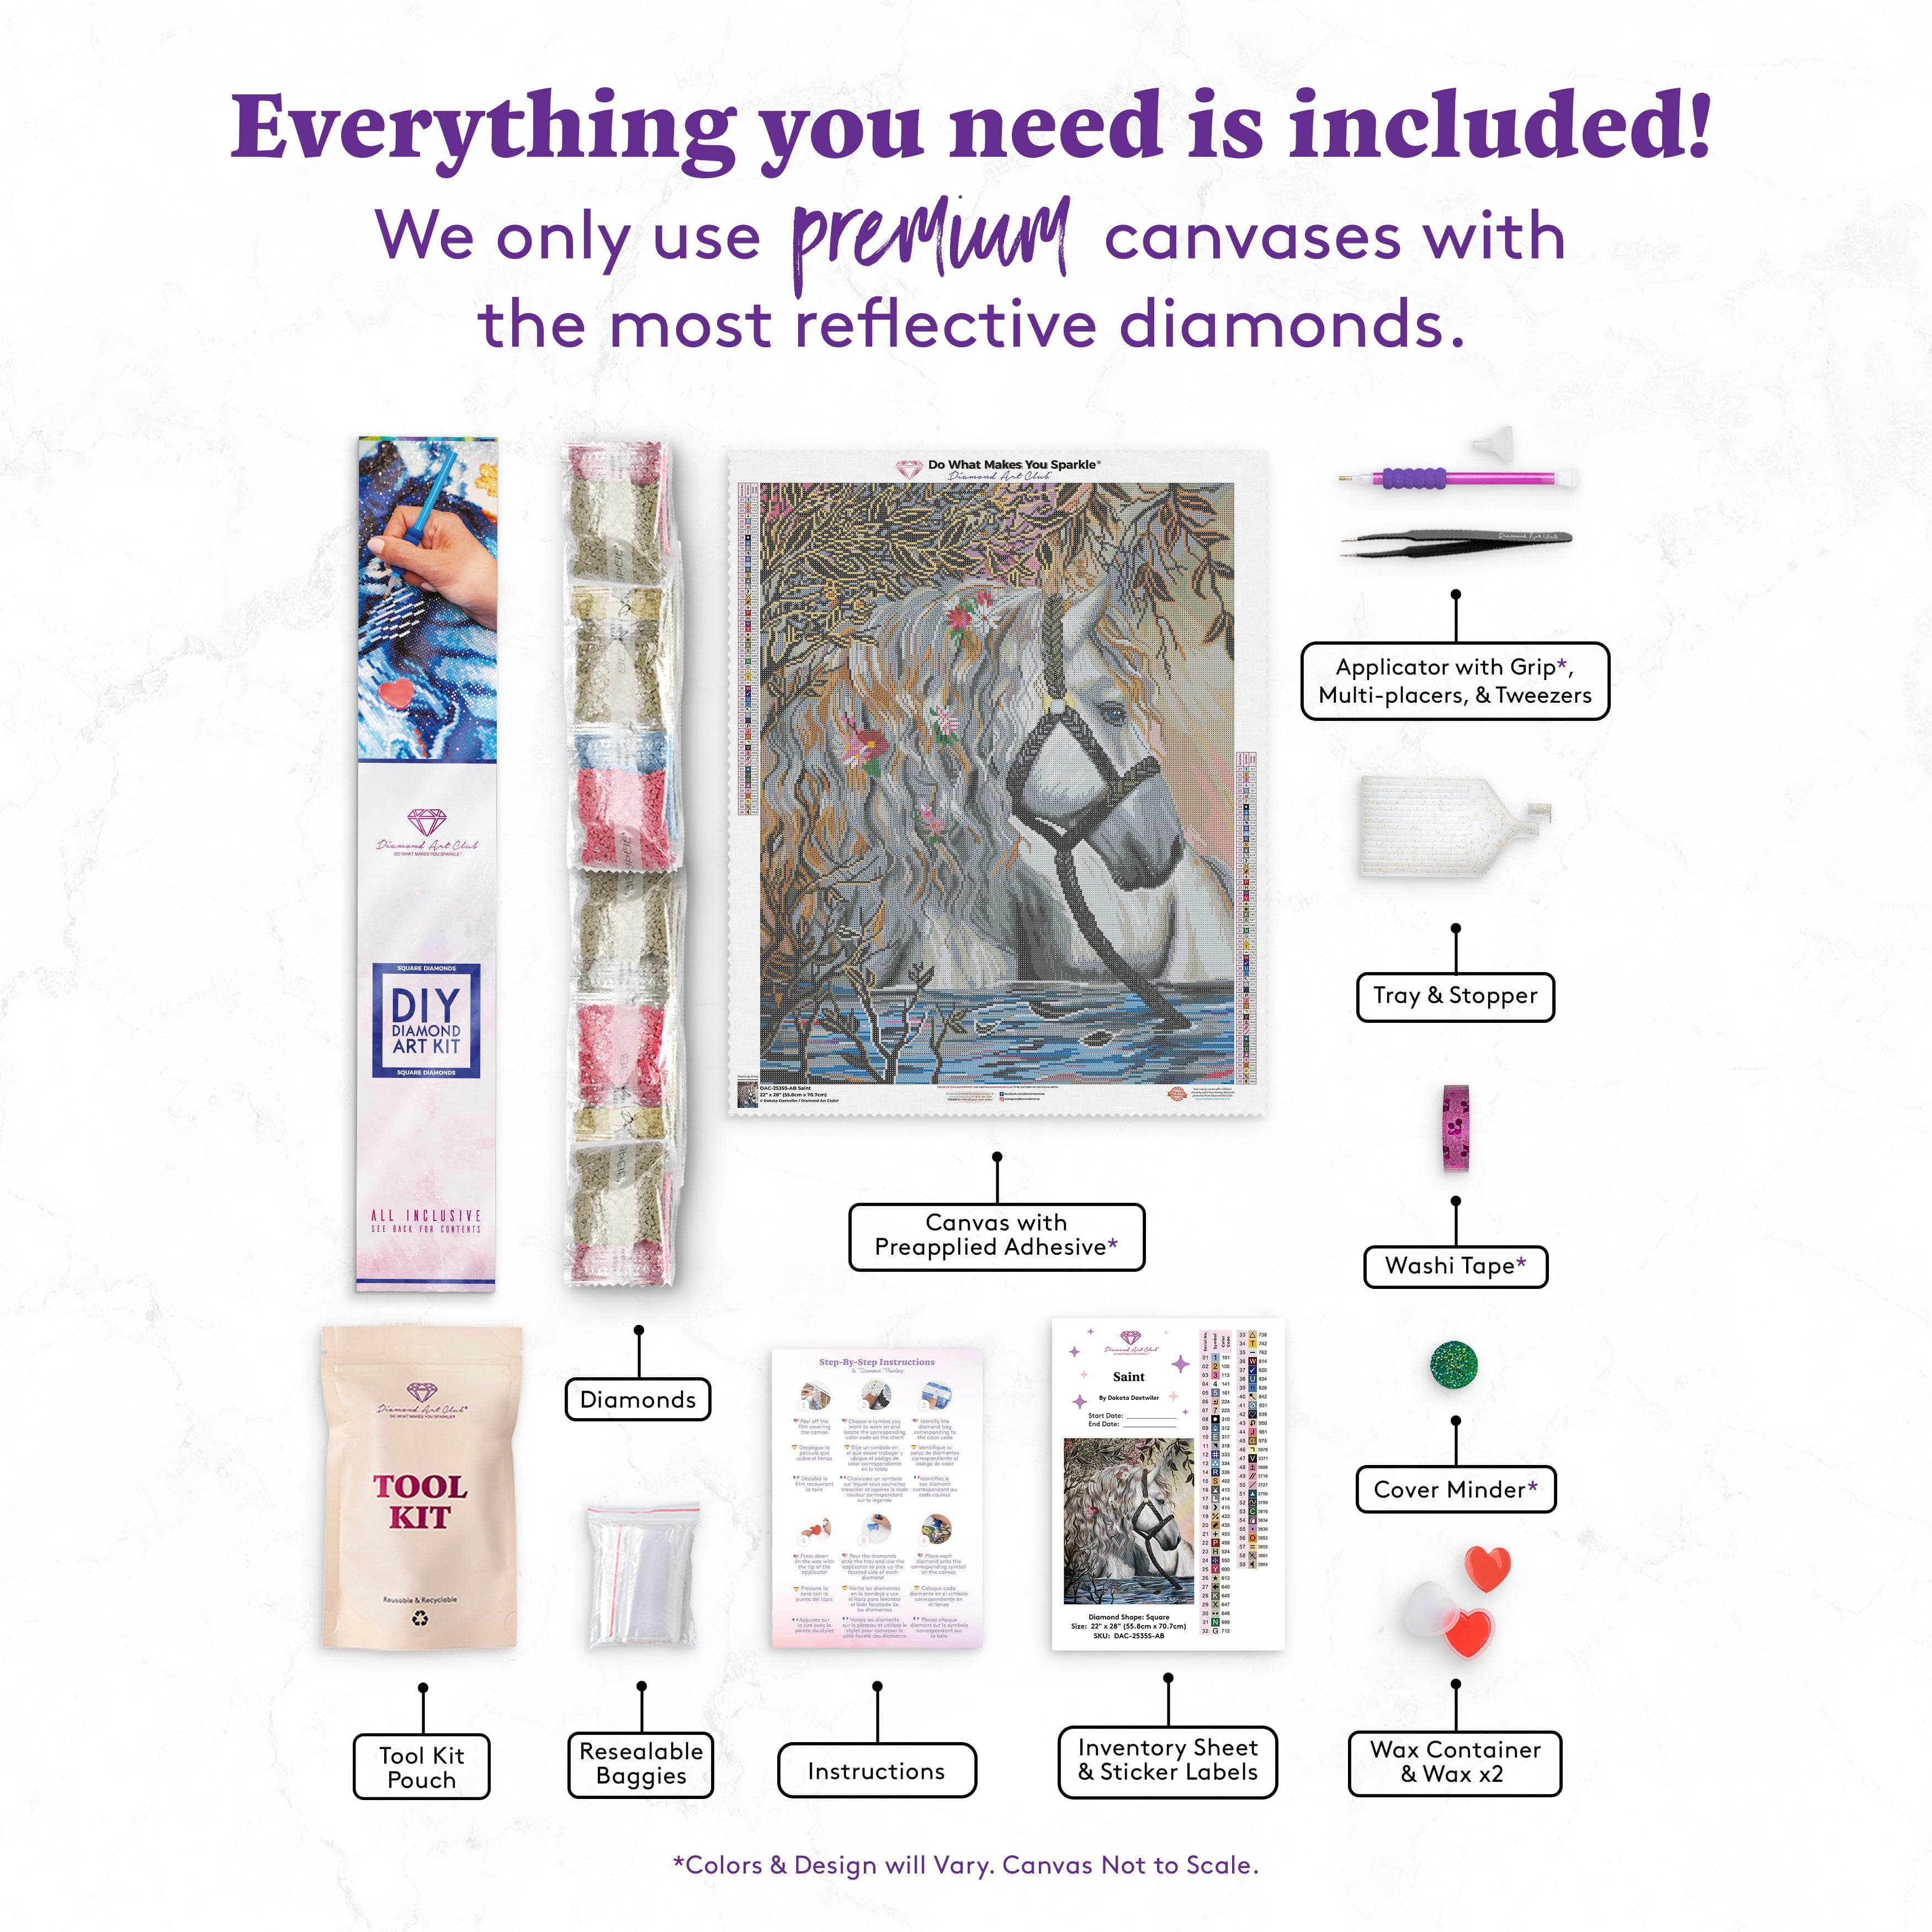 Valentine's Day Confession Diamond Painting Kits 20% Off Today – DIY Diamond  Paintings